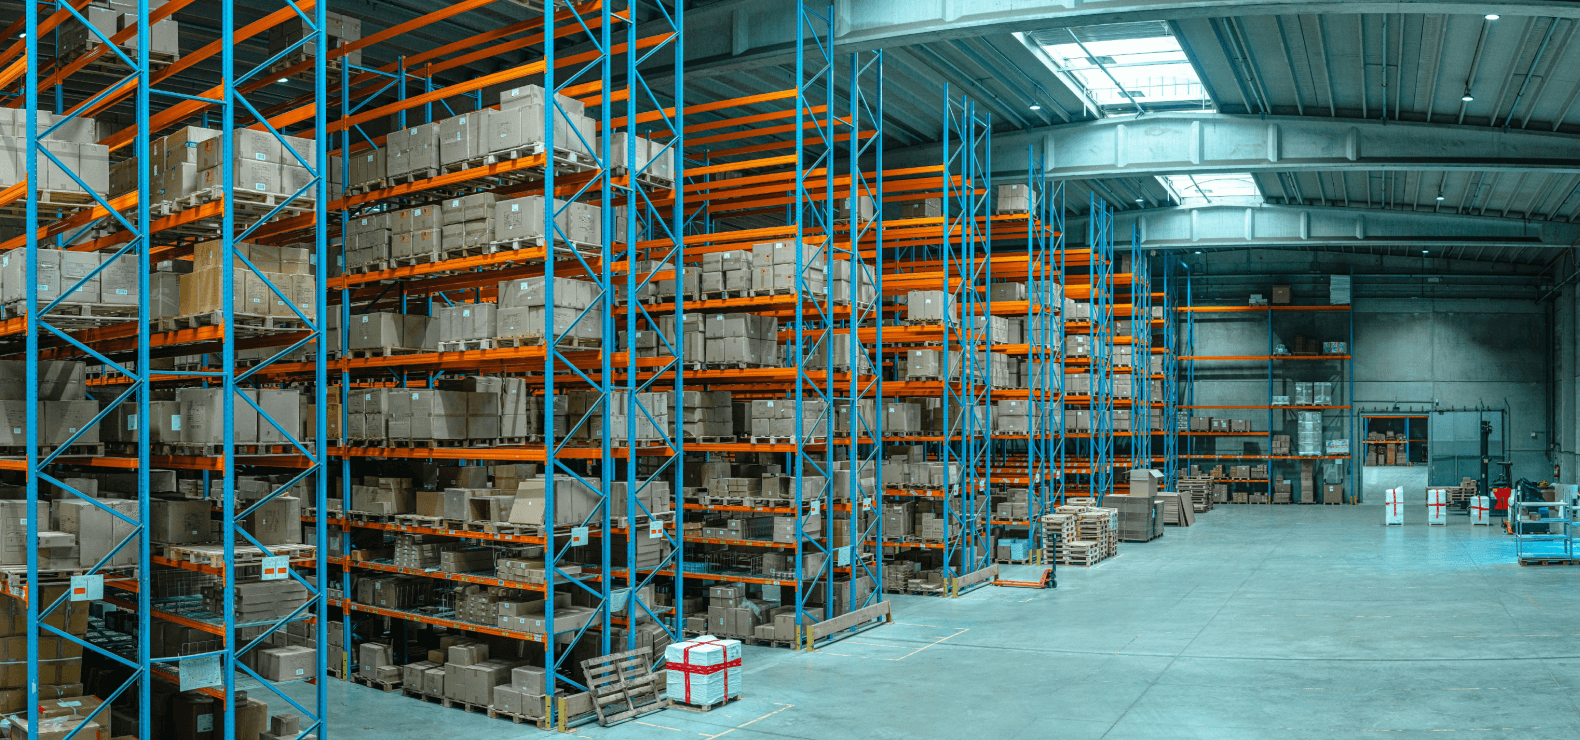 Amazon fba warehouse